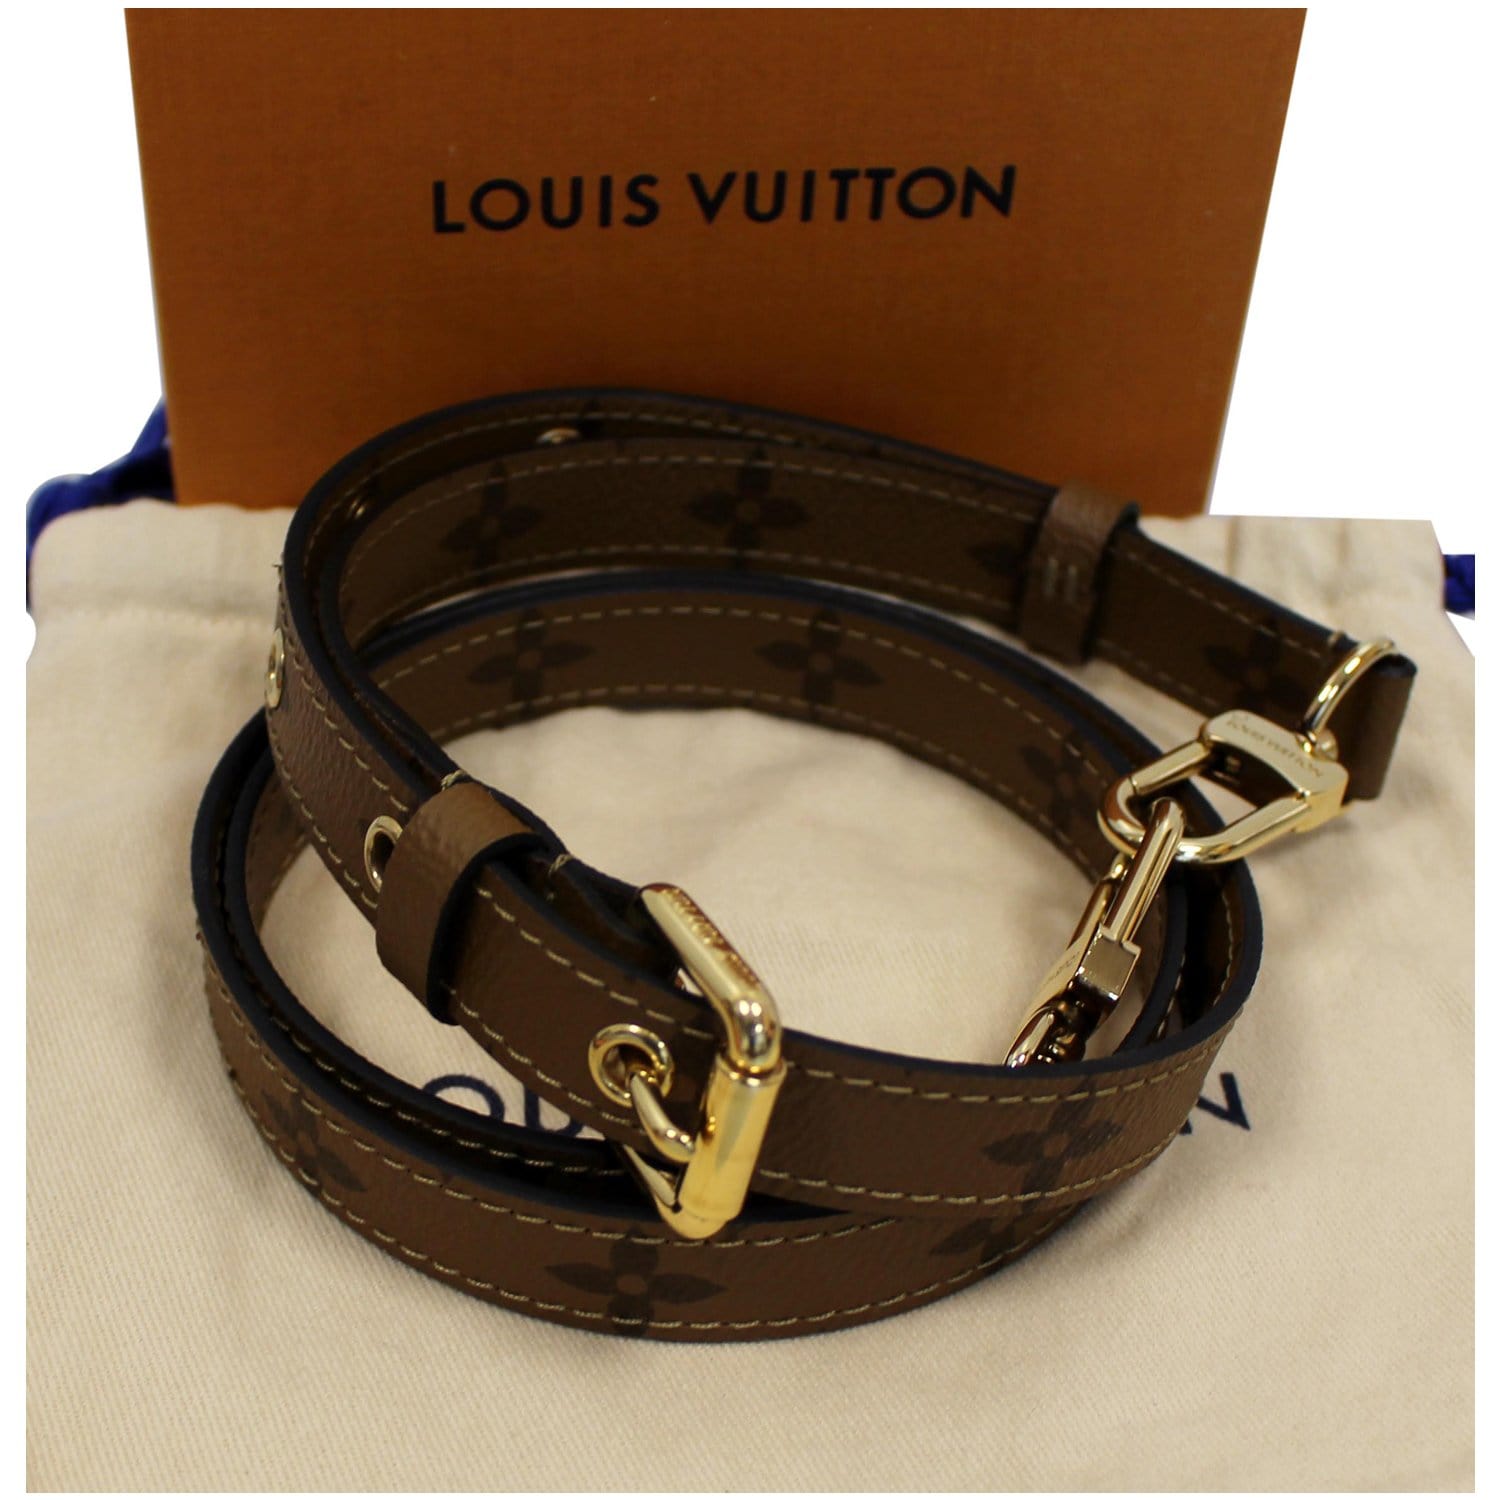 LOUIS VUITTON Monogram Wrist Strap 674917